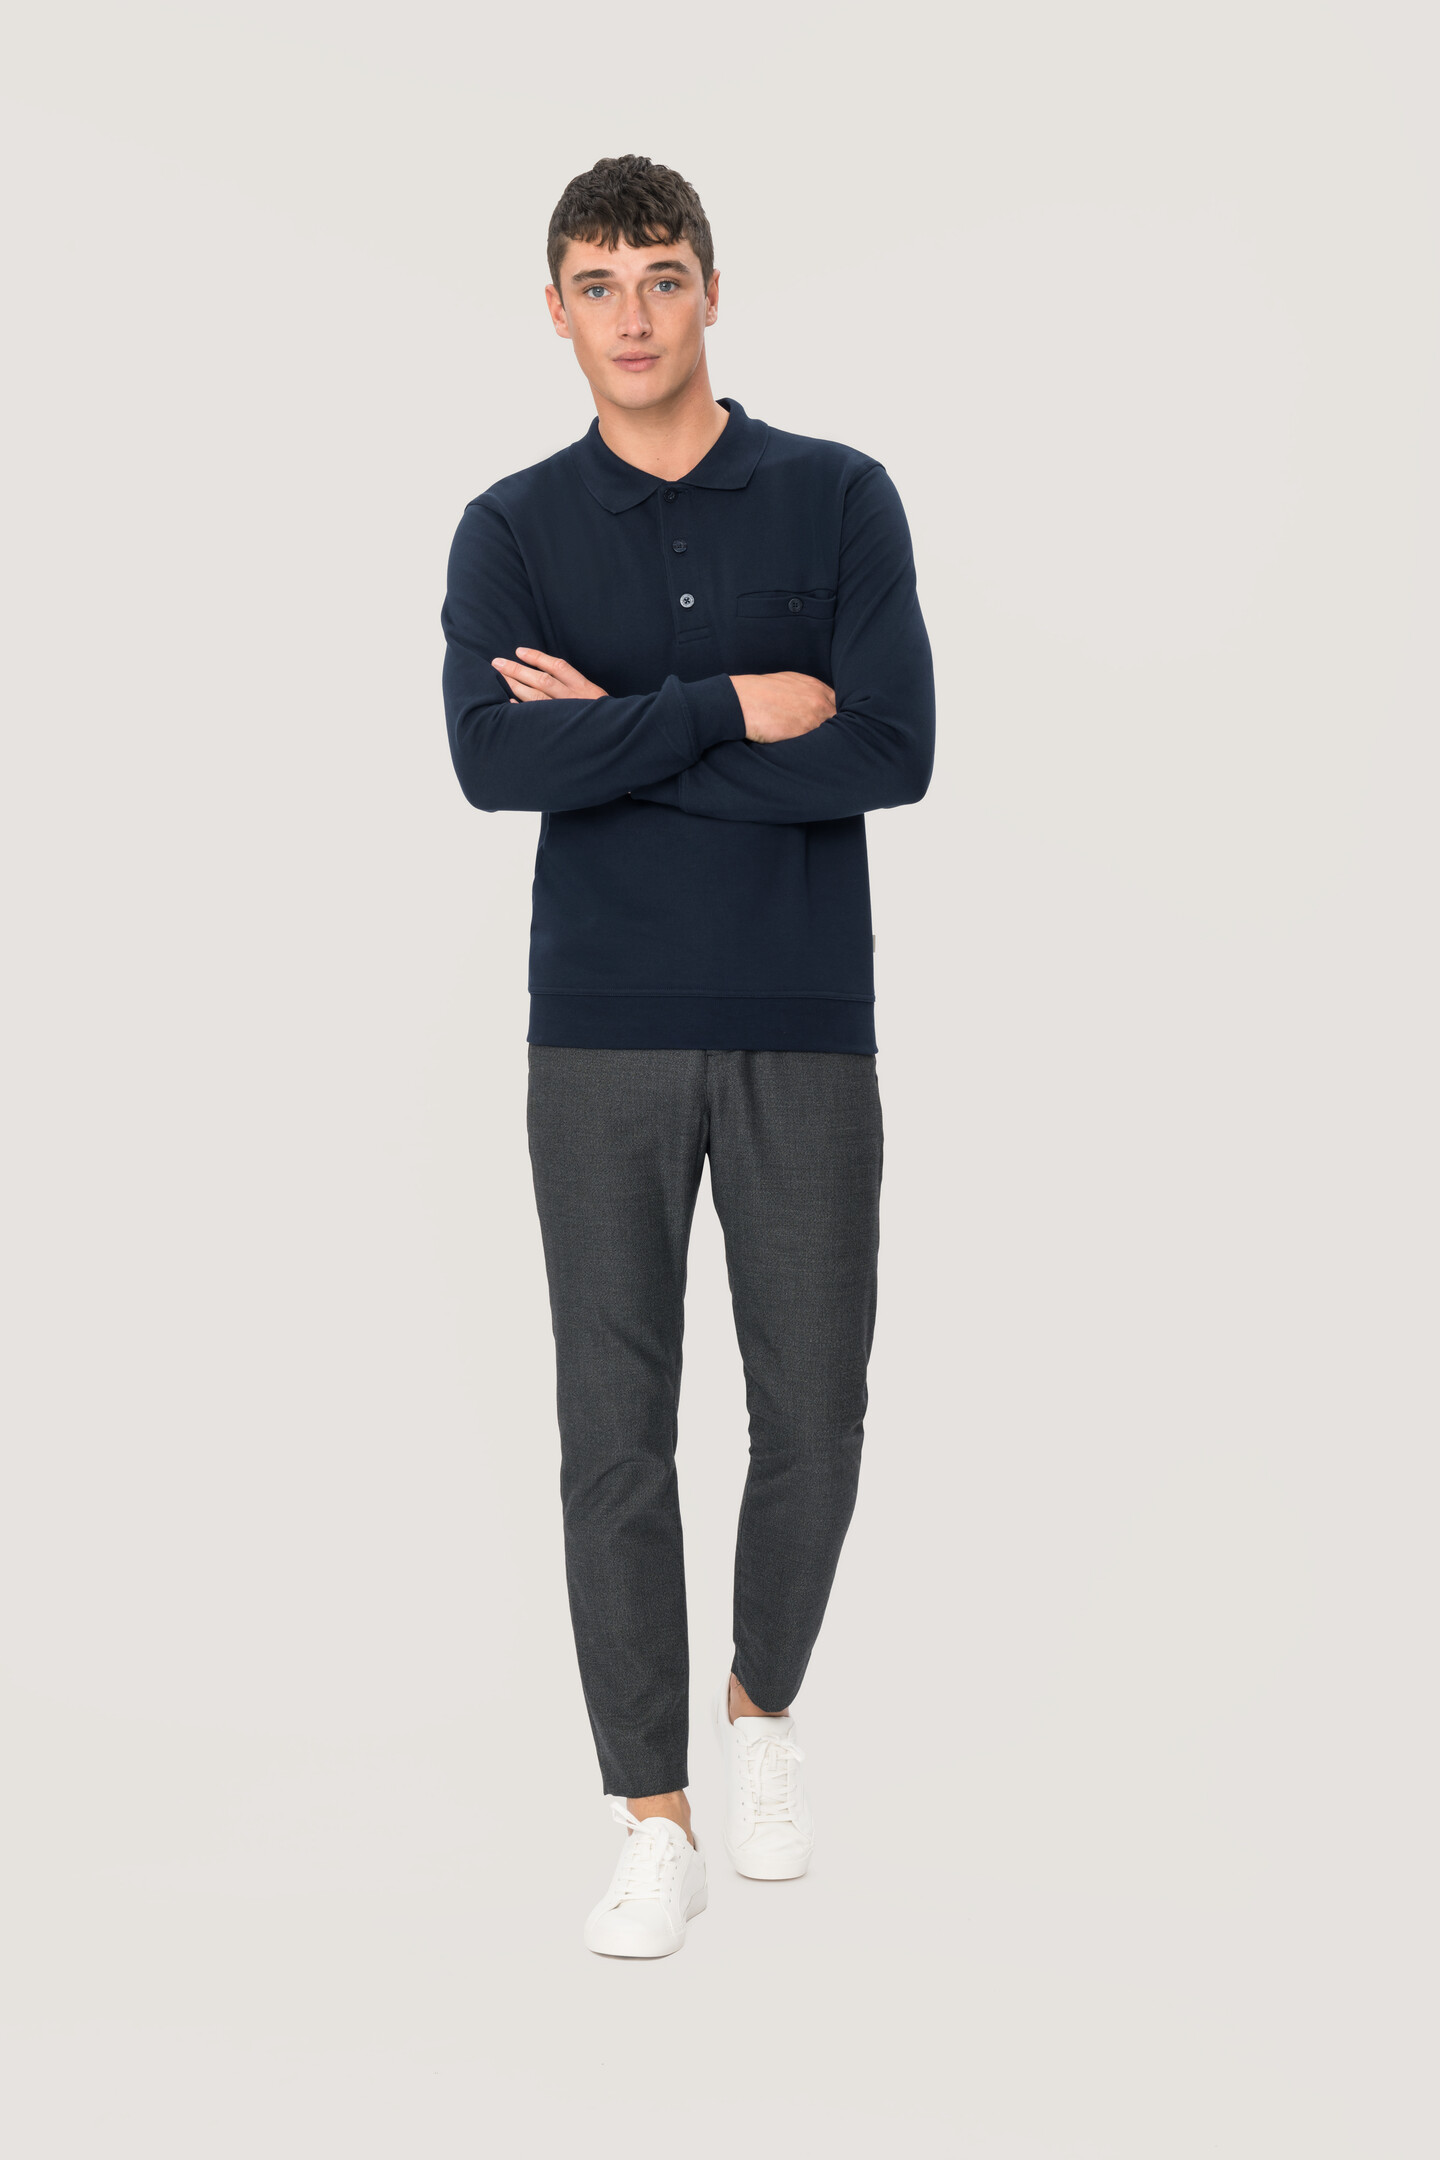 HAKRO Pocket-Sweatshirt 457 Premium